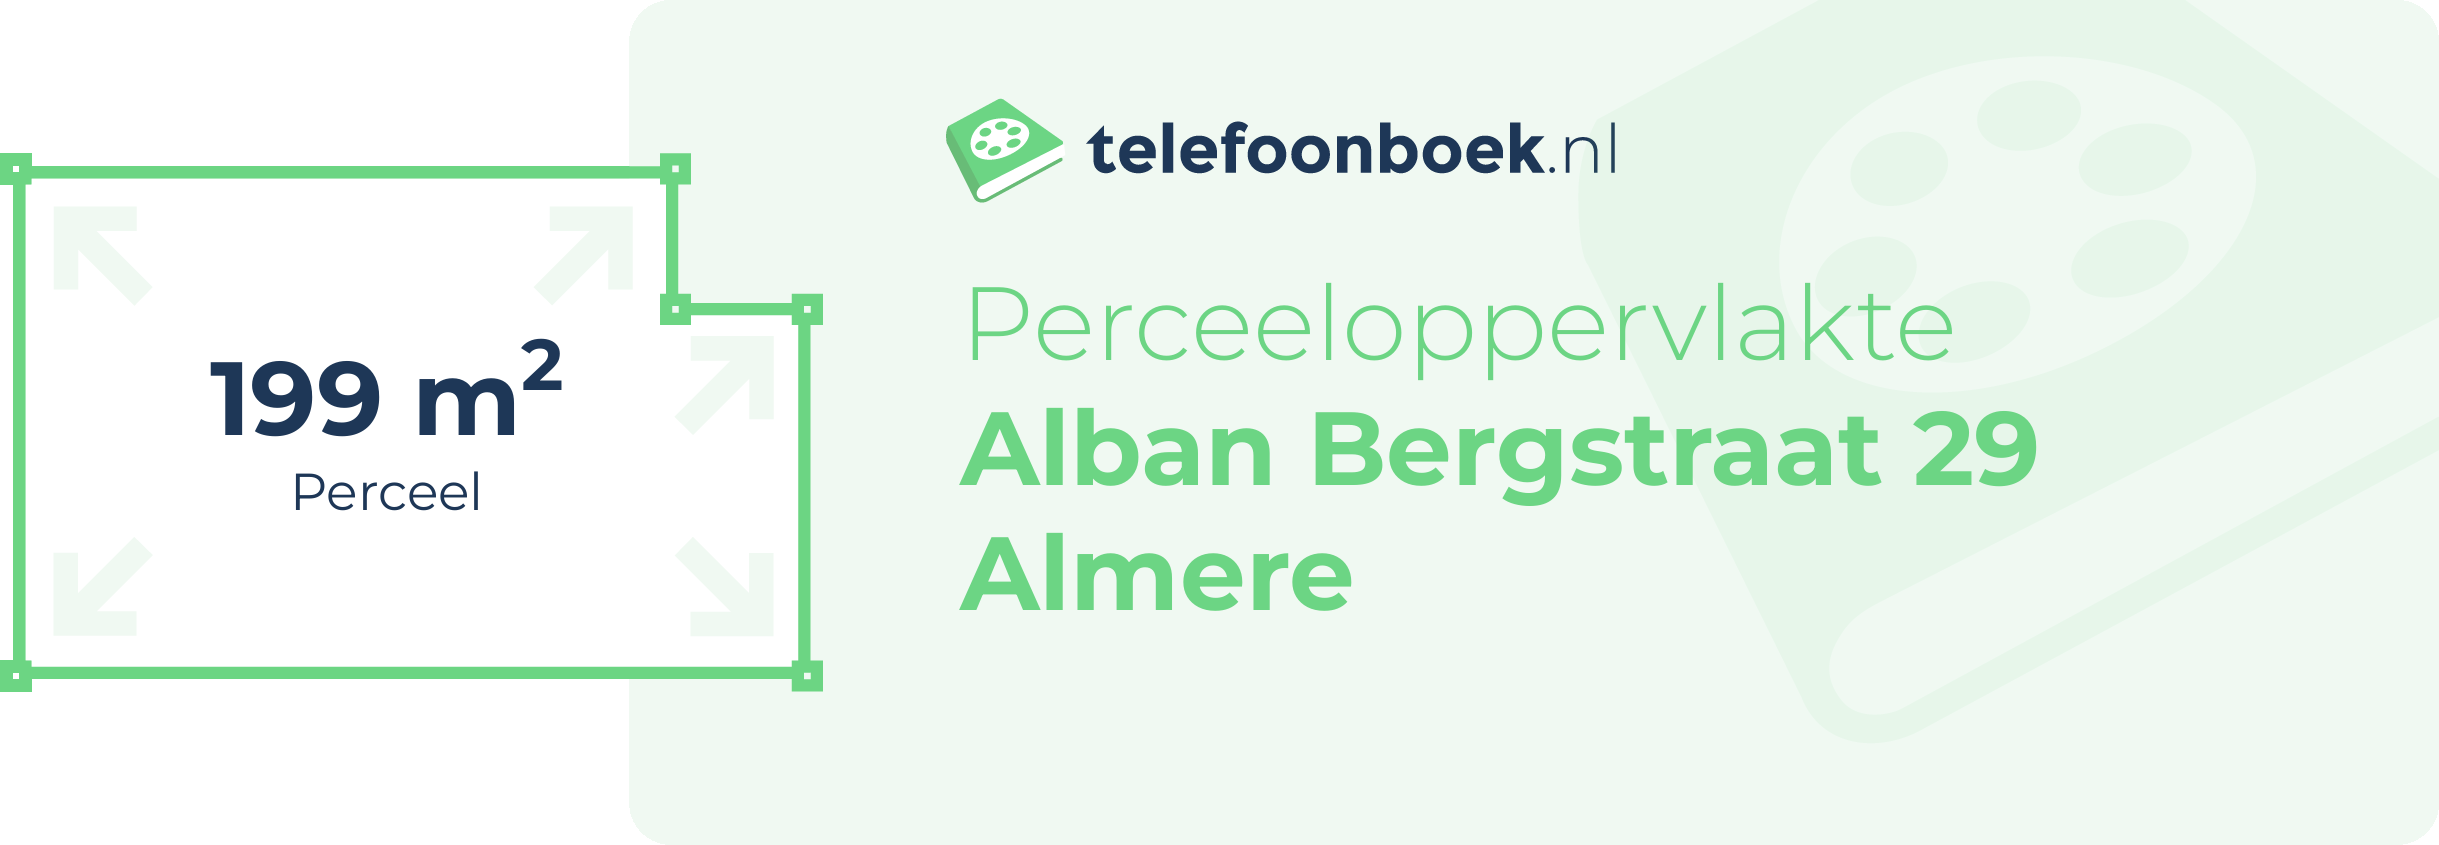 Perceeloppervlakte Alban Bergstraat 29 Almere